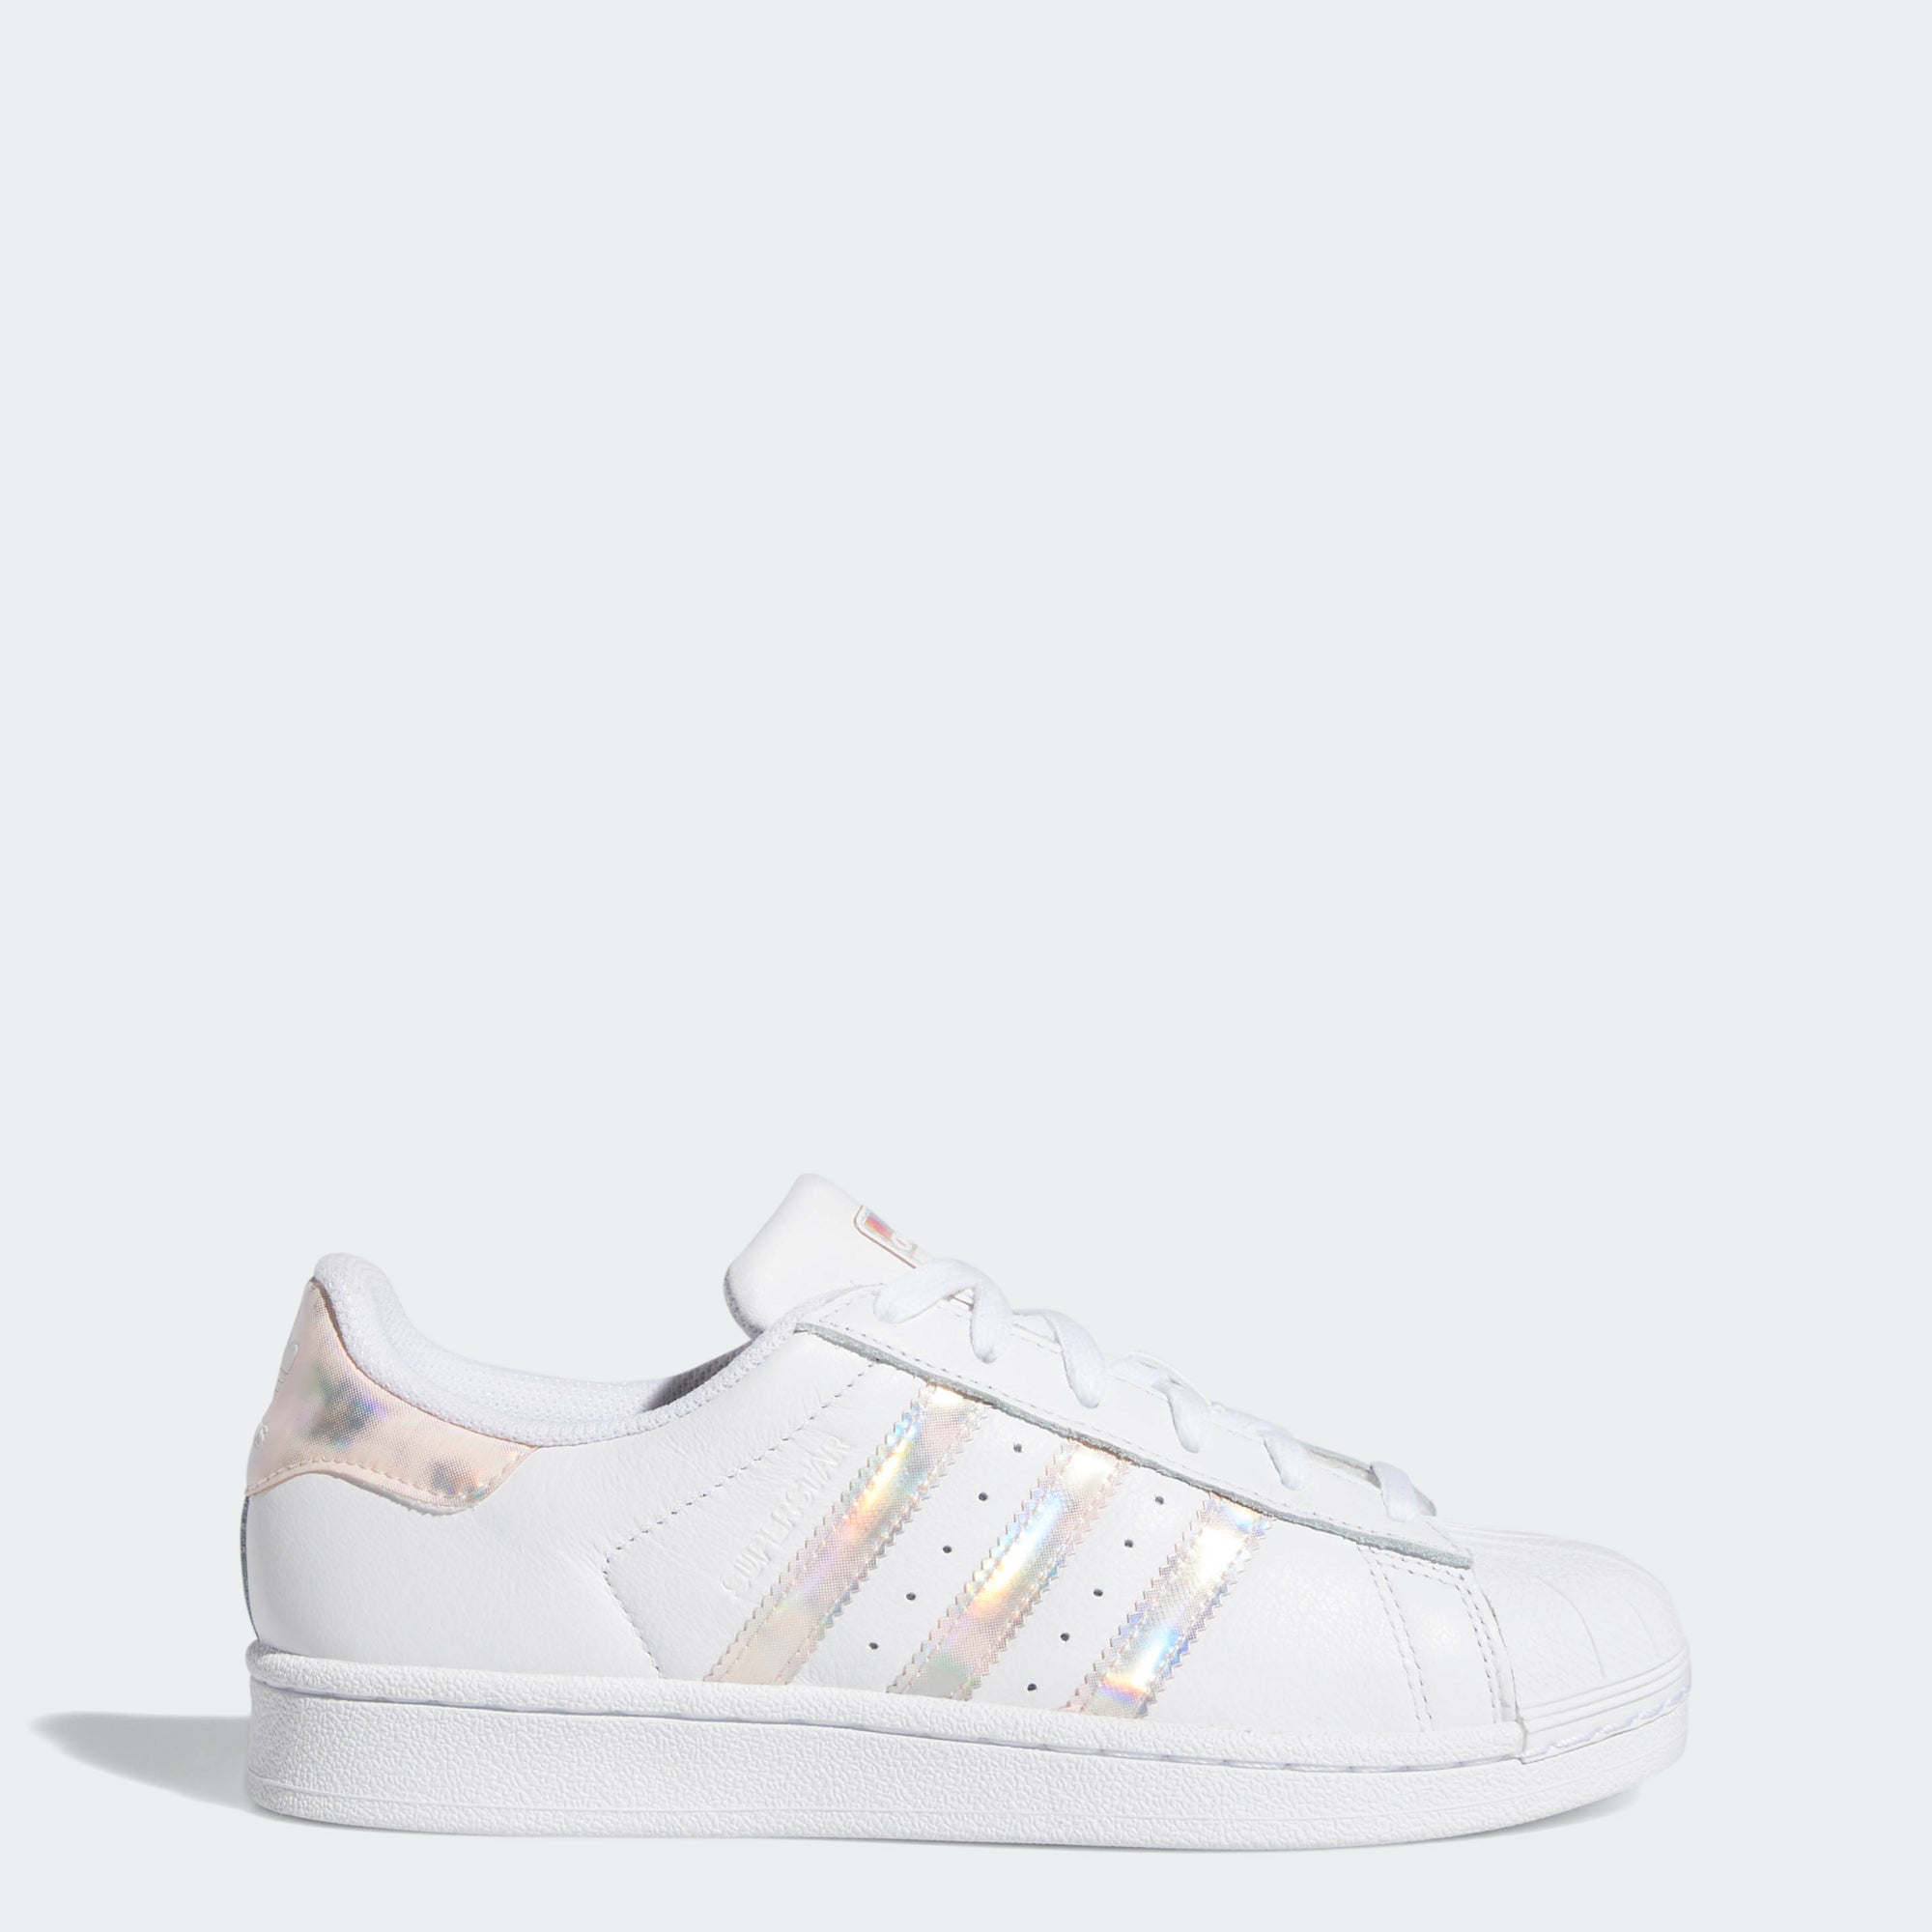 adidas white reflective shoes